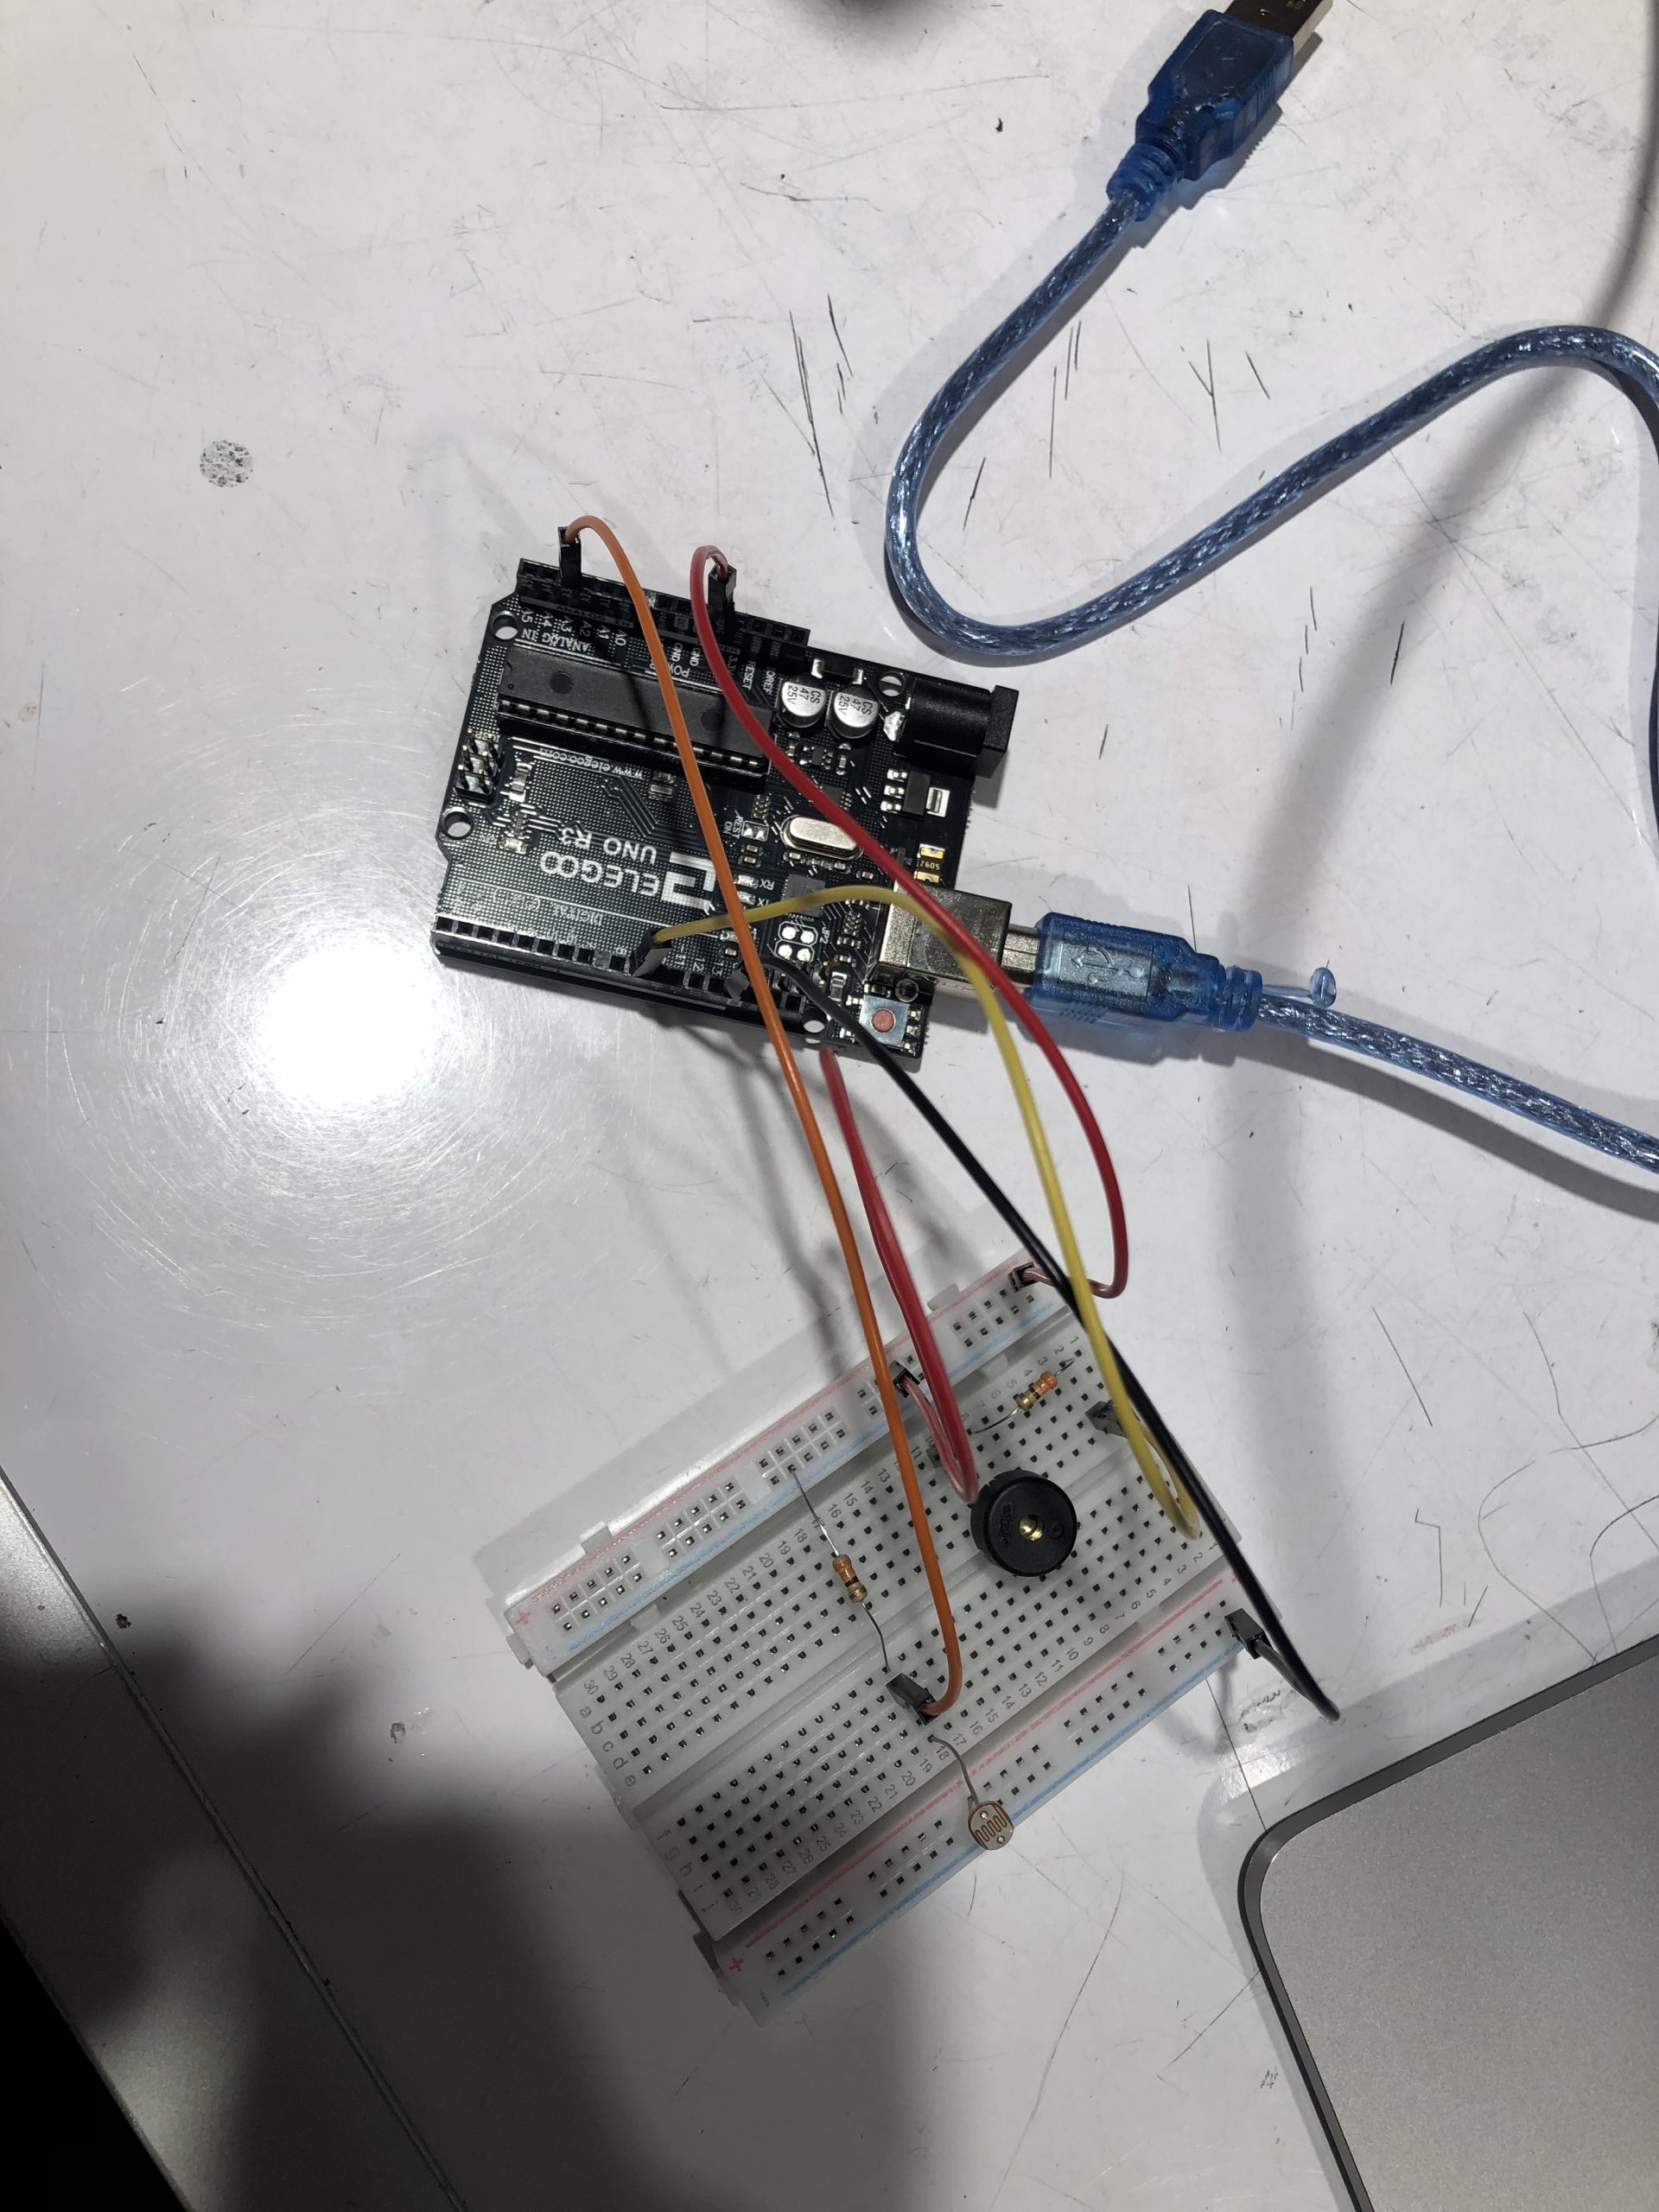 Wiring of a buzzer